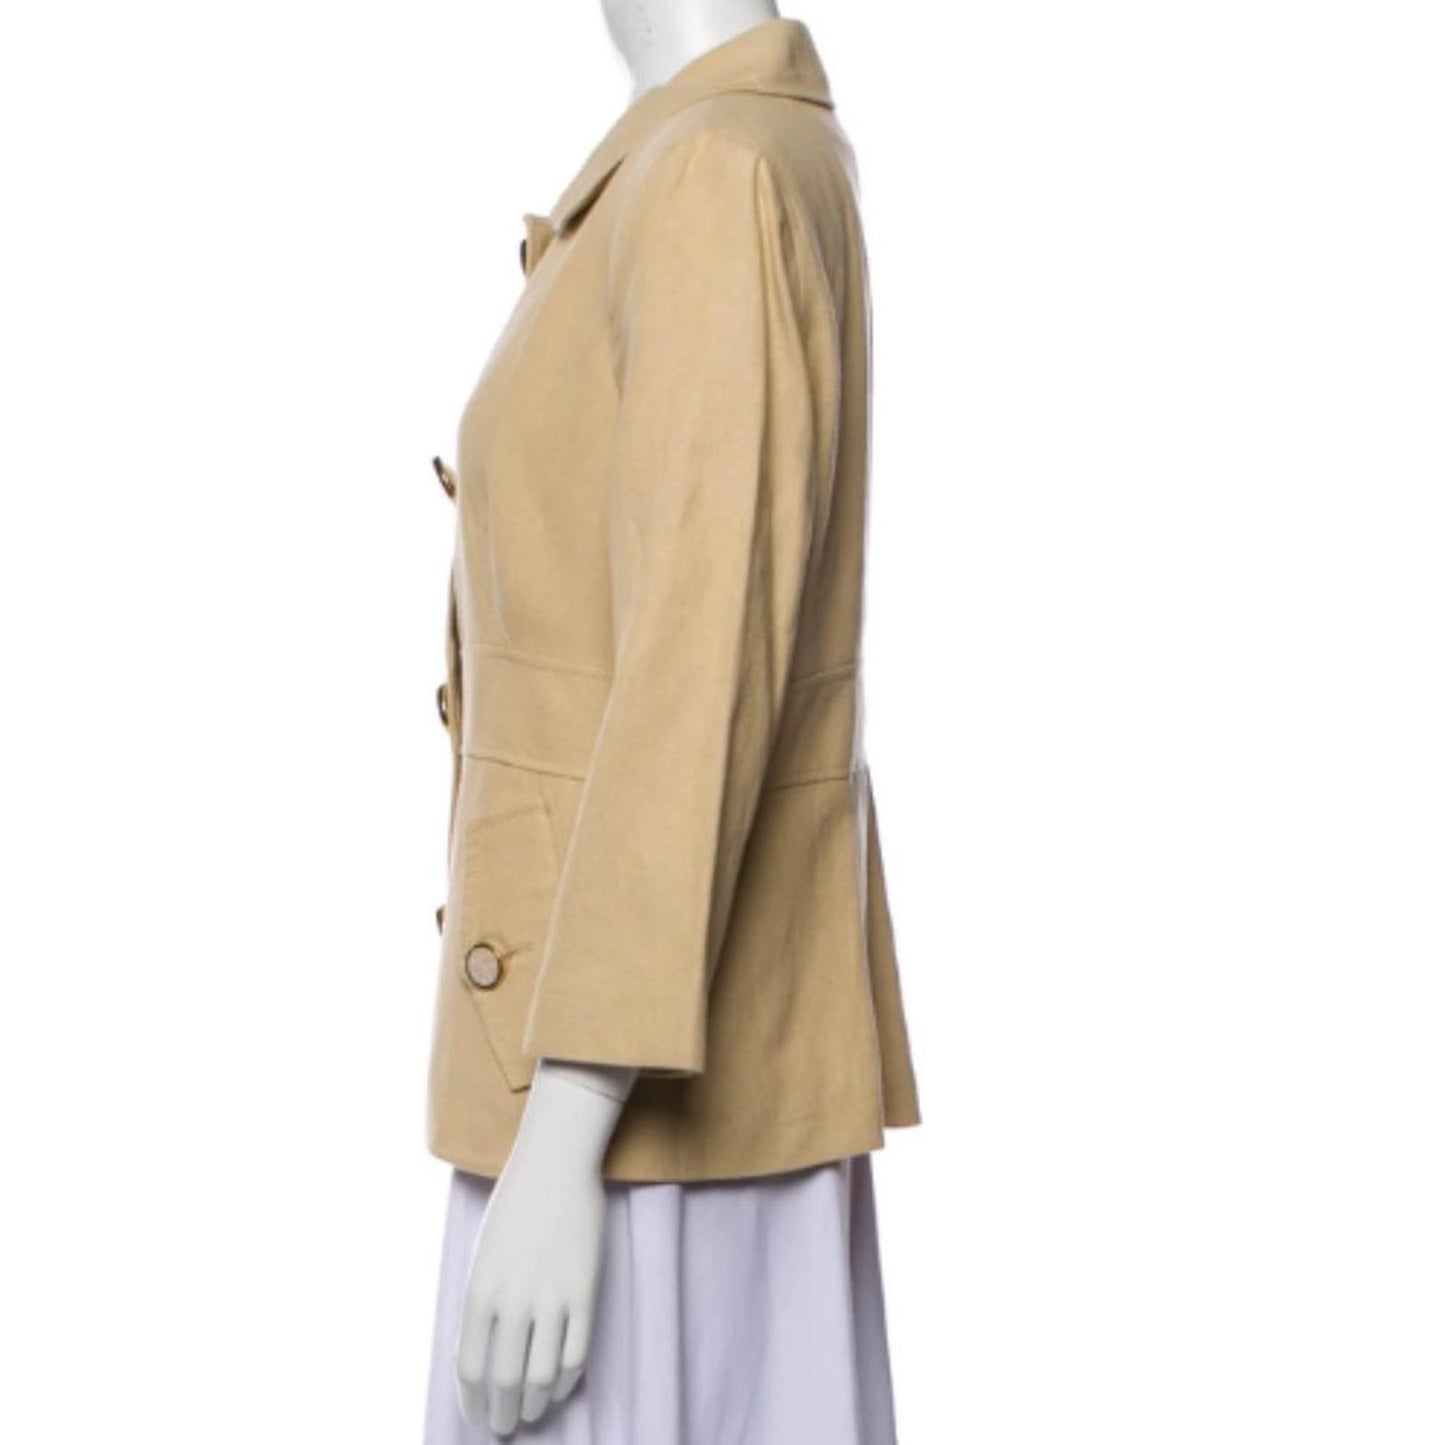 Tory Burch Large Button Classic Jacket in Tan Khaki Size 10